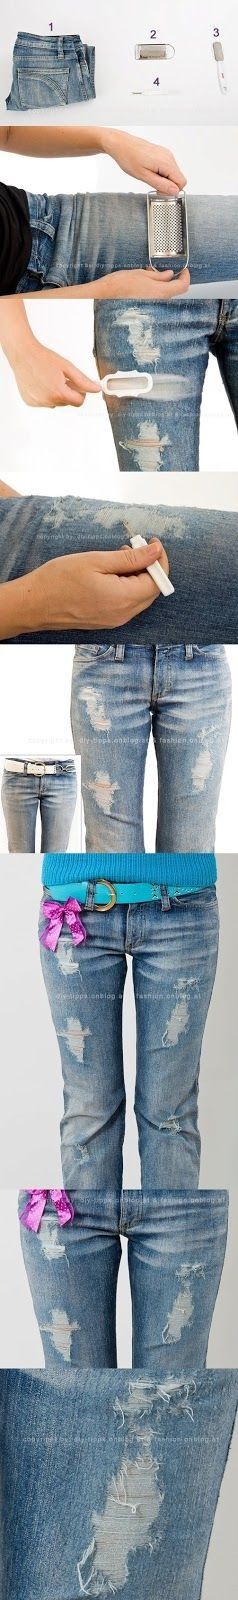 costumizar jeans